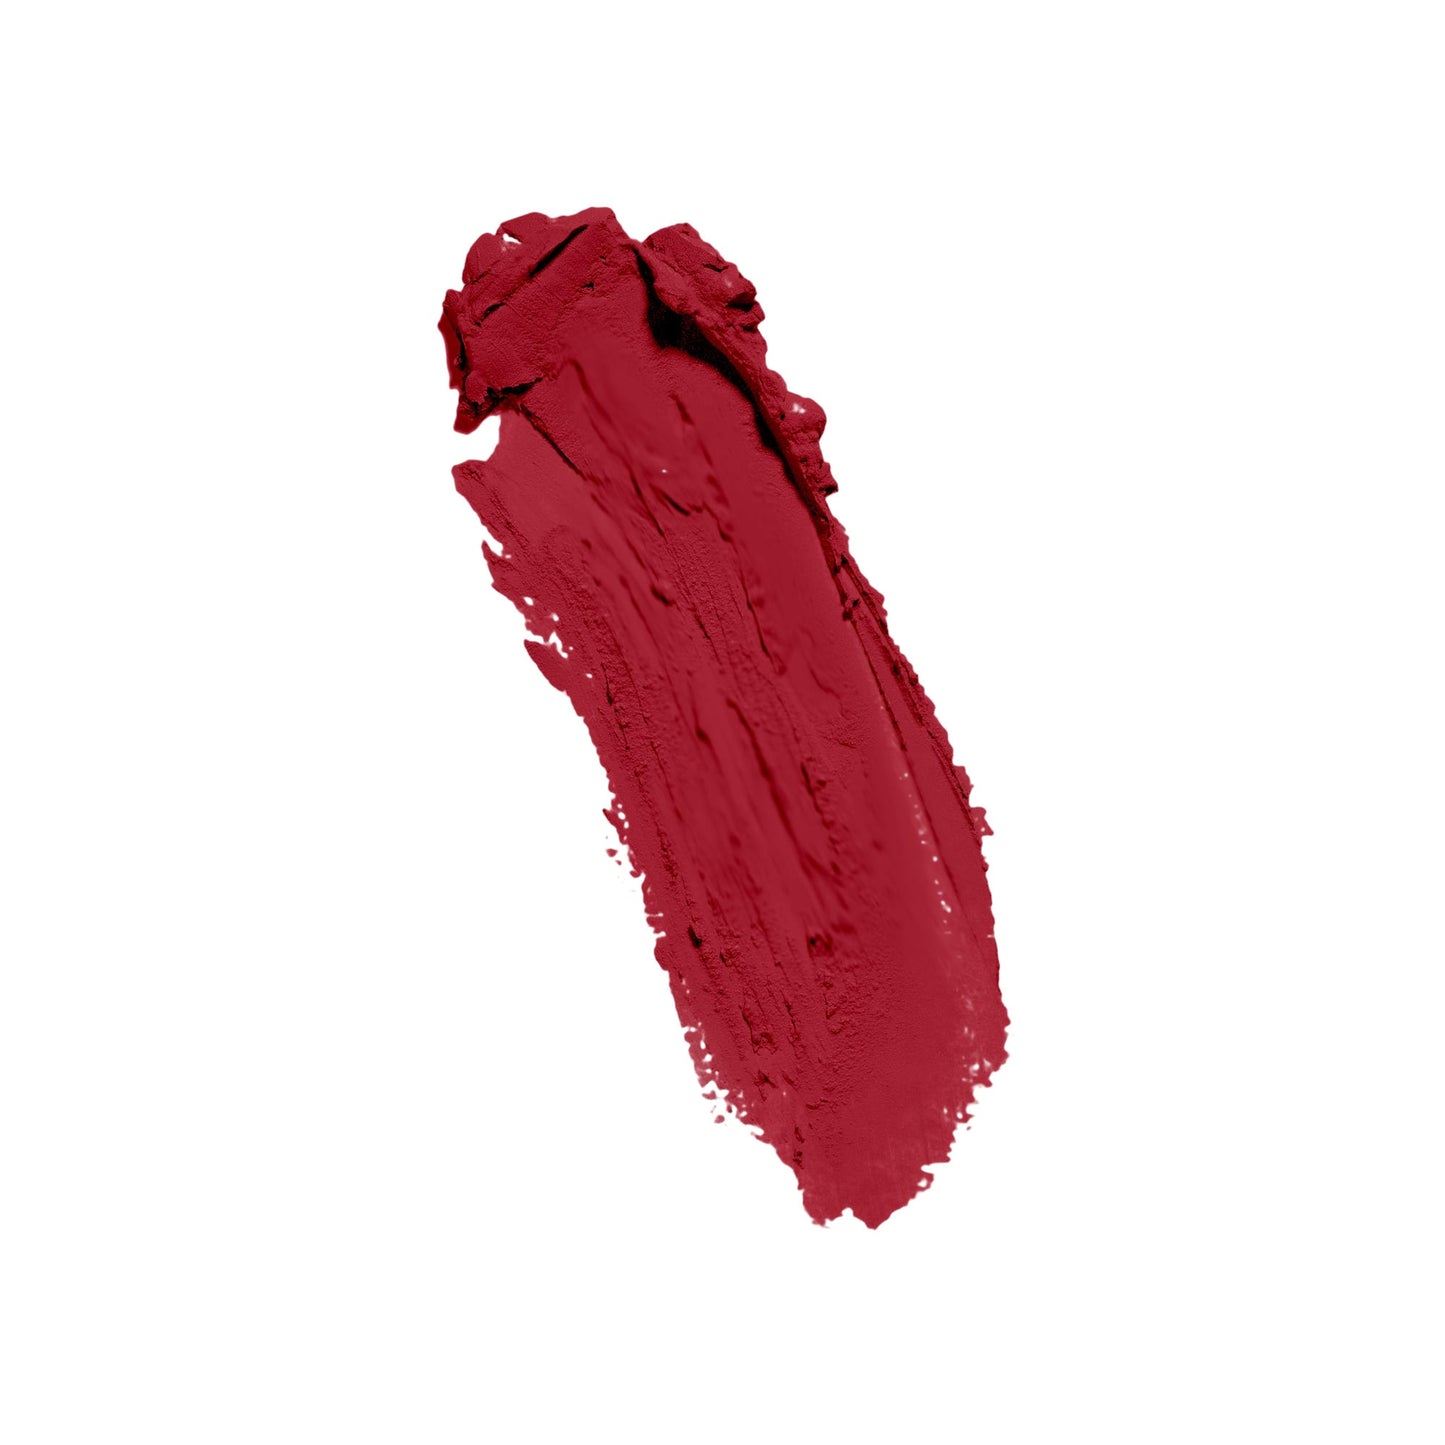 Deep Plum - Creamy Lipstick Lipstick - Laila Beauty Care Lipstick